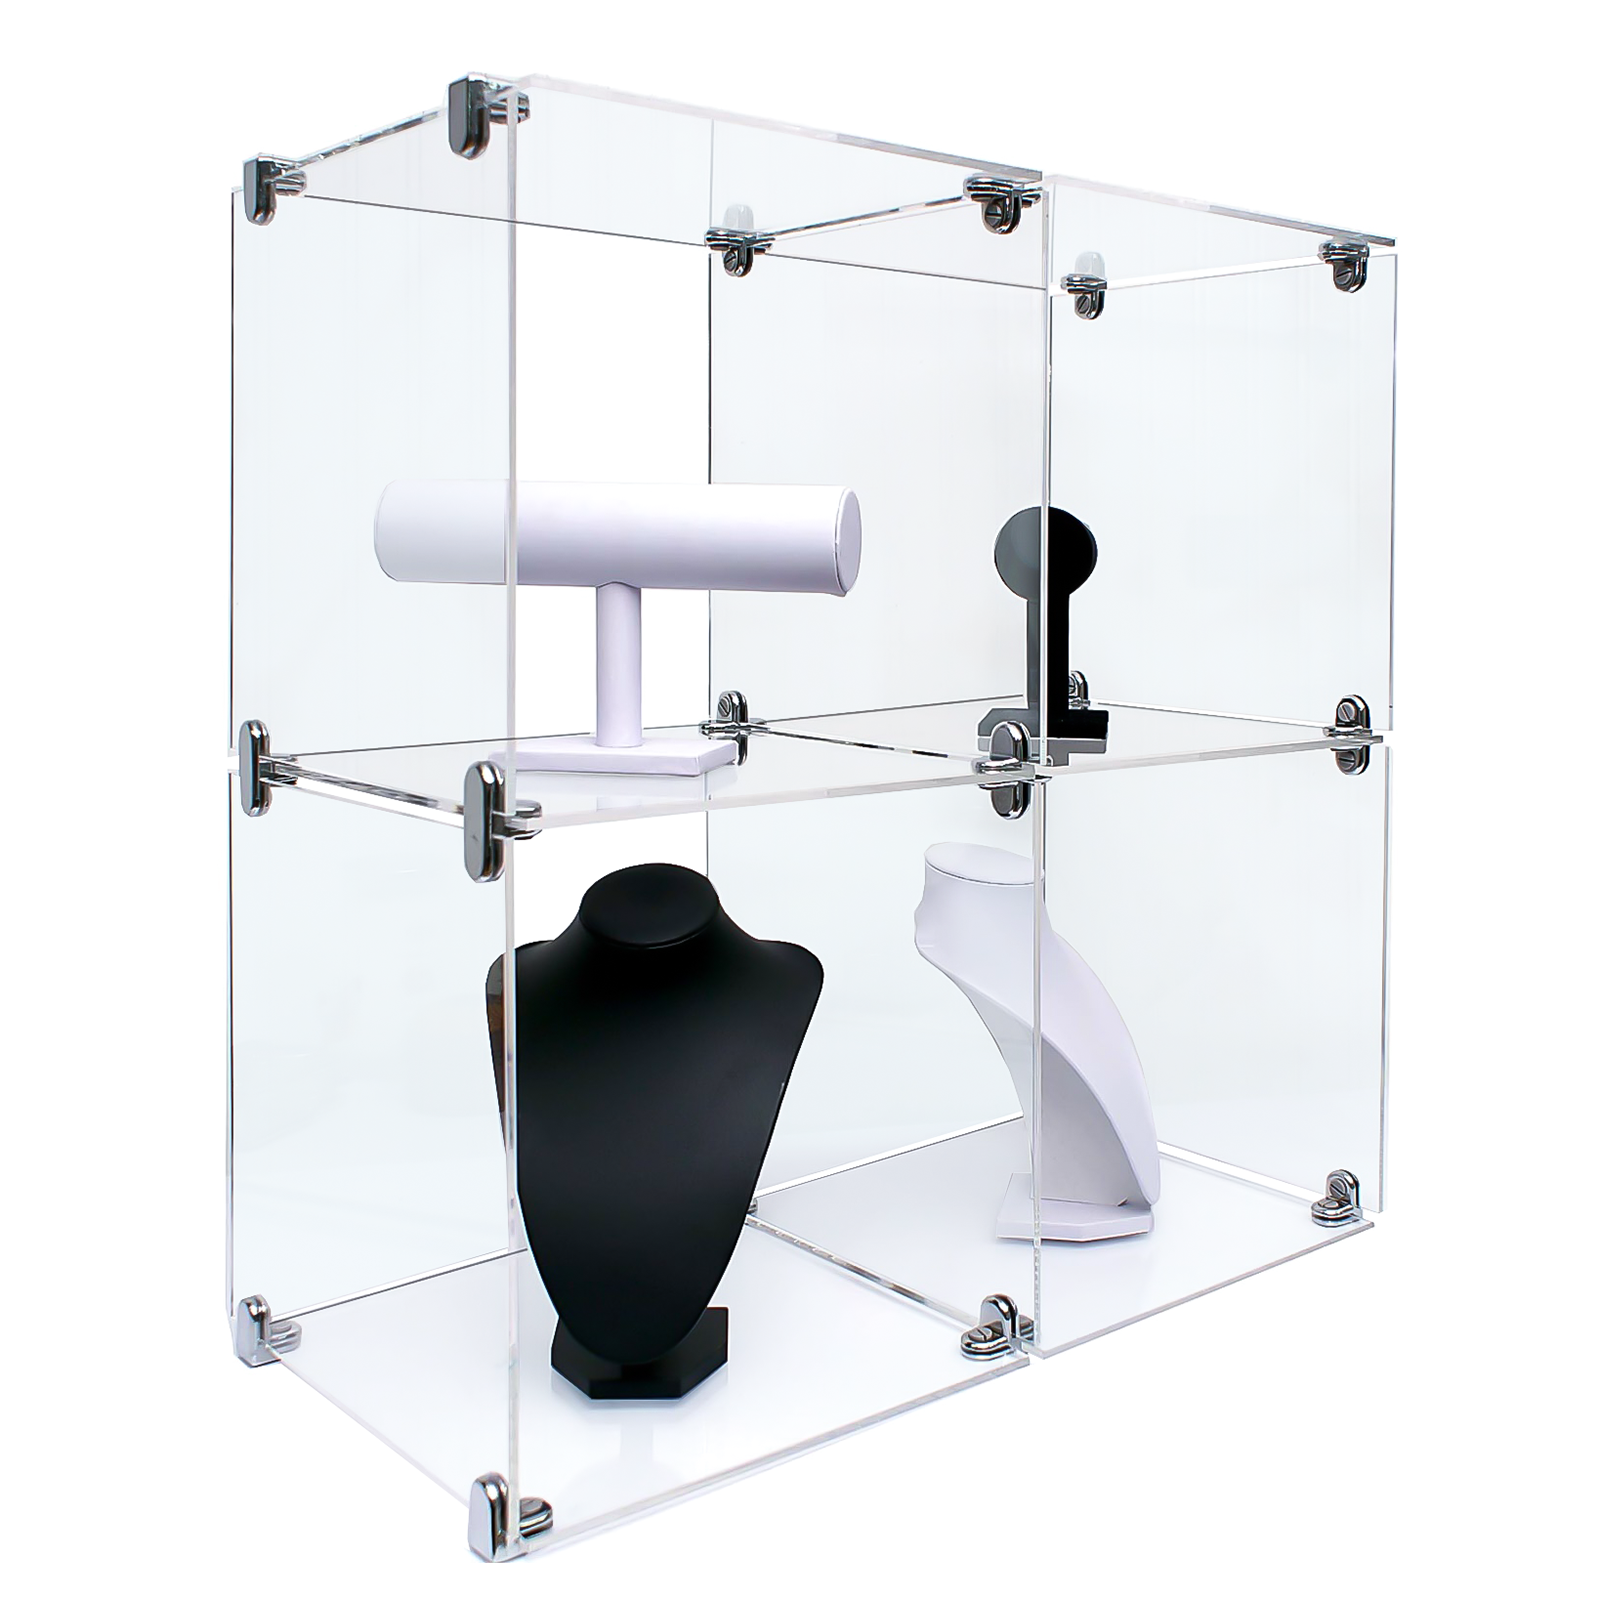 2x2 Cube - Acrylic Modular Display System (DSCUBE2x2)